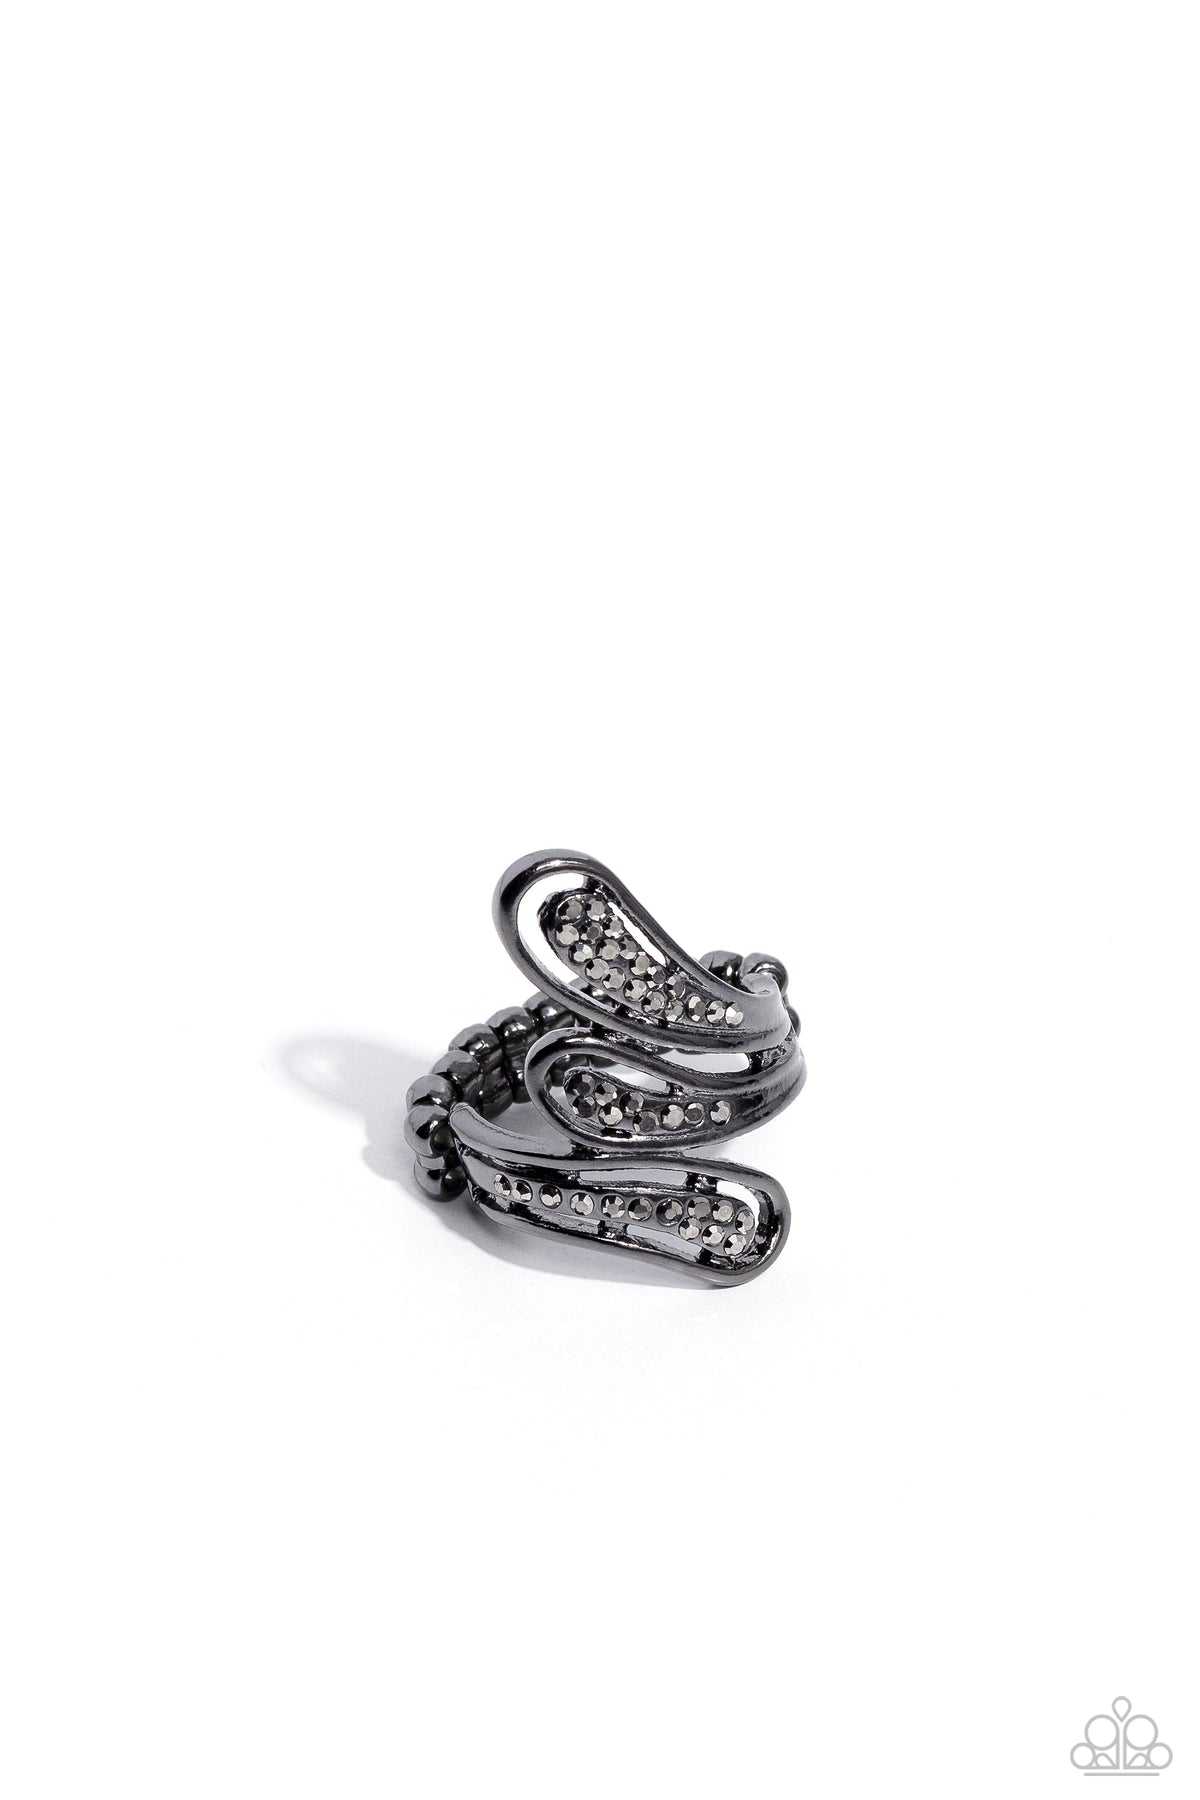 Flared Fashion Gunmetal Black &amp; Hematite Ring - Paparazzi Accessories- lightbox - CarasShop.com - $5 Jewelry by Cara Jewels